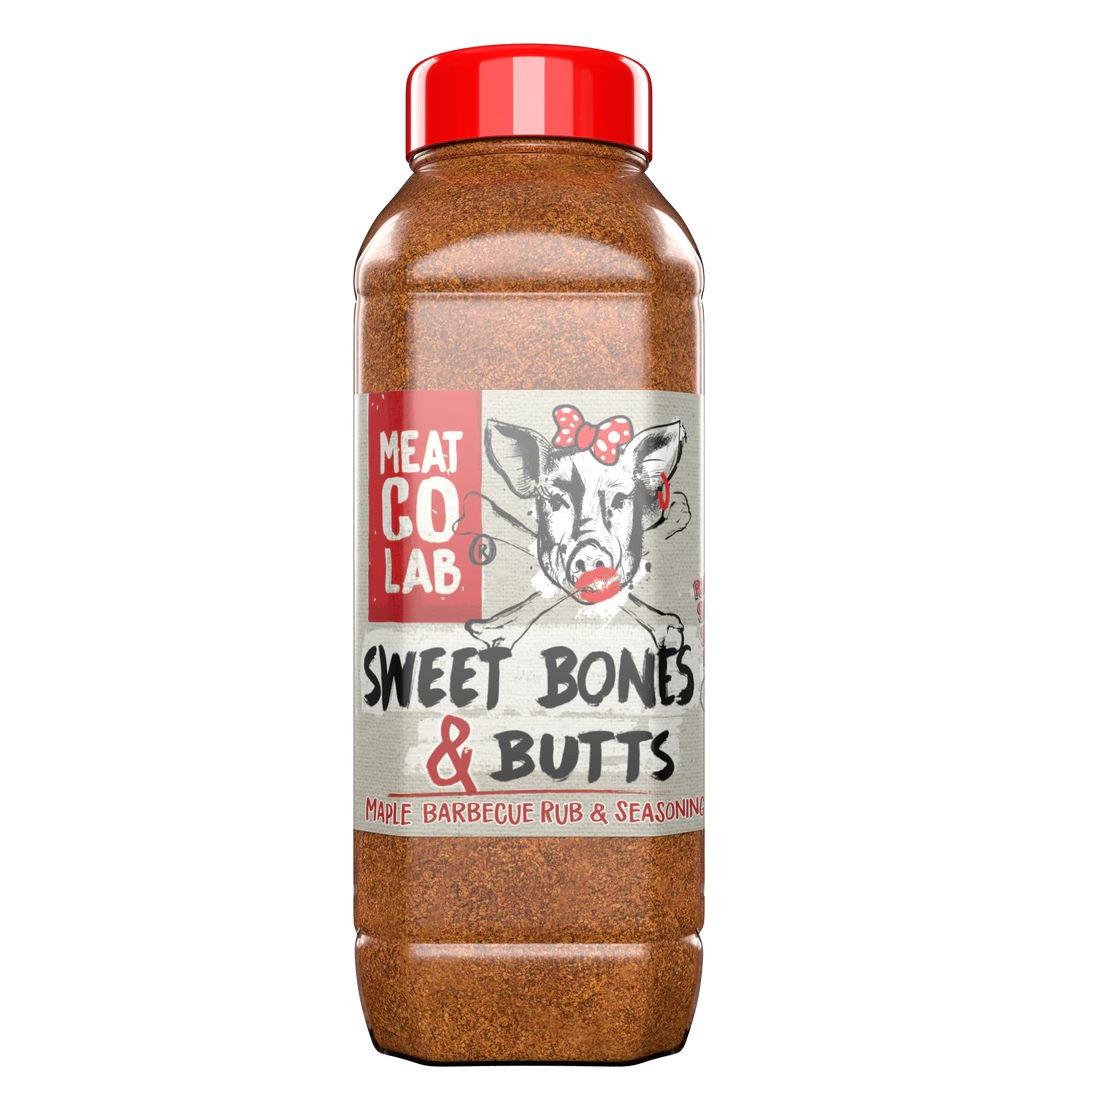 1.2kg Sweet Bones & Butts BBQ Rub by Meat Co. Lab. - BBQ Land